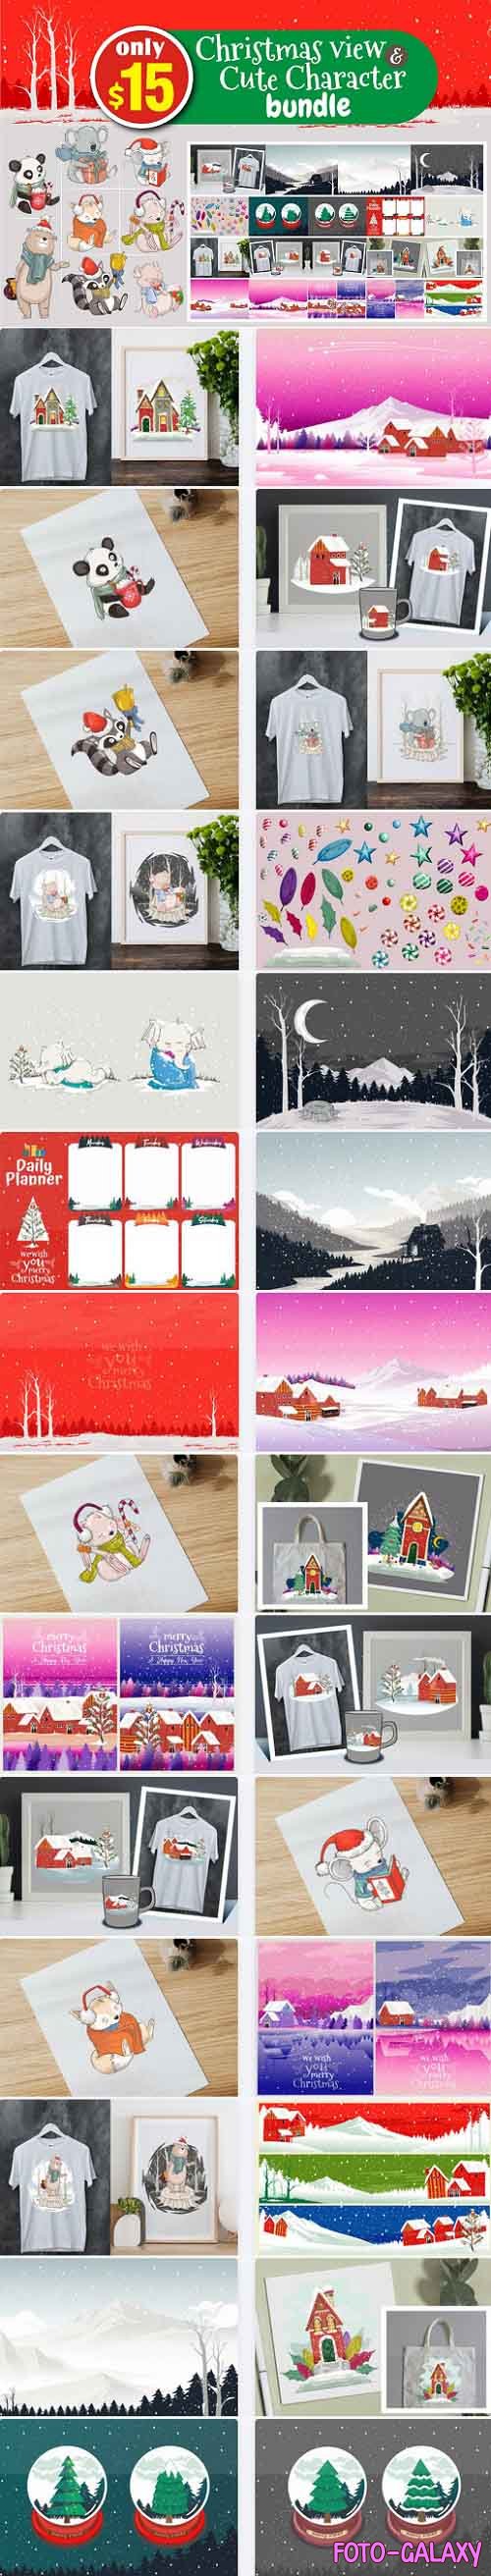 Christmas View & Cute Character Bundle - 28 Premium Graphics